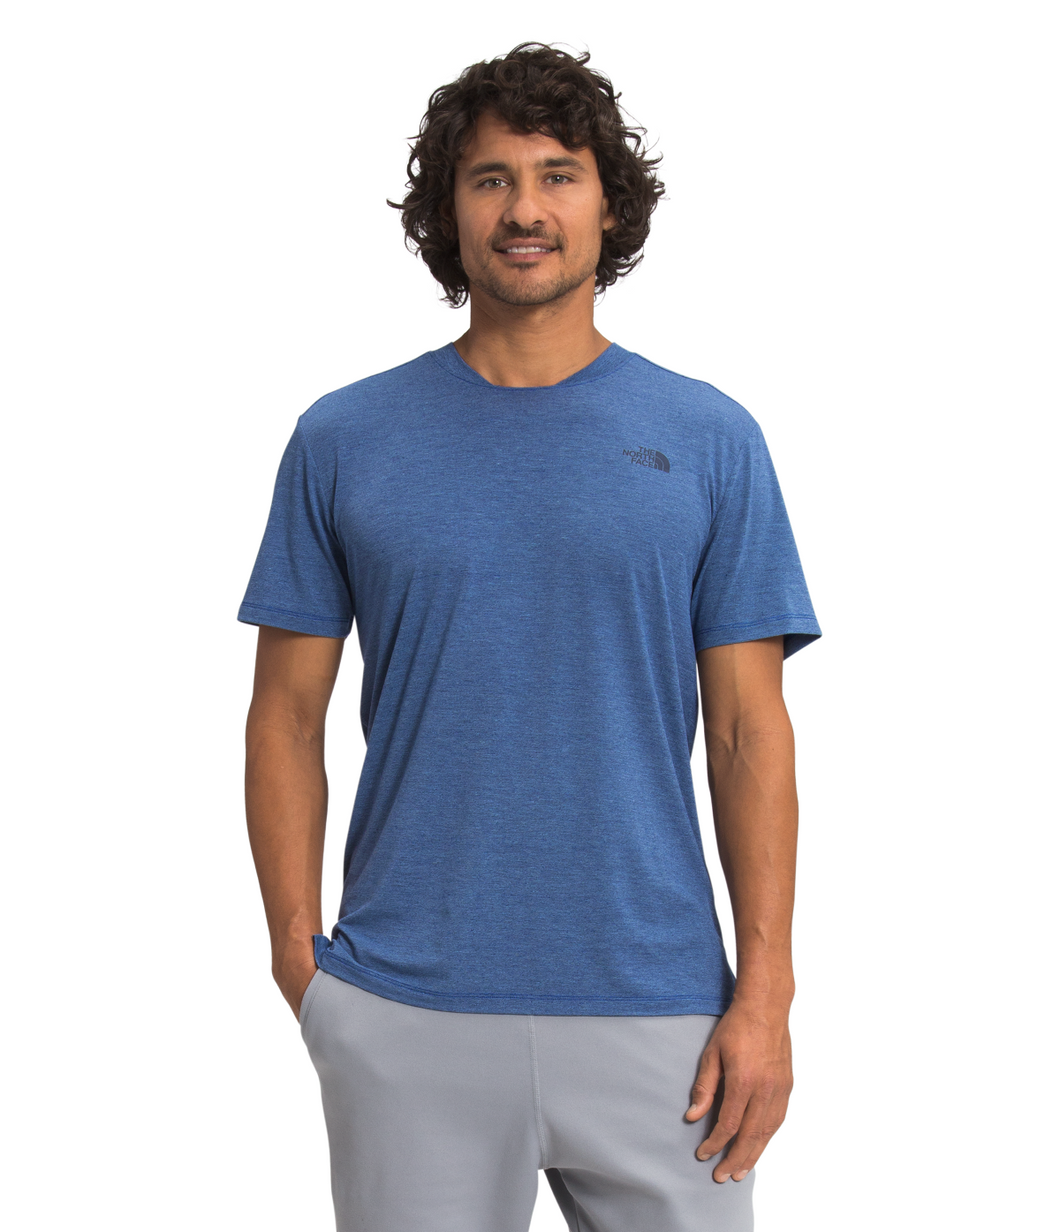 'The North Face' Men's Wander T-Shirt - Bolt Blue Heather